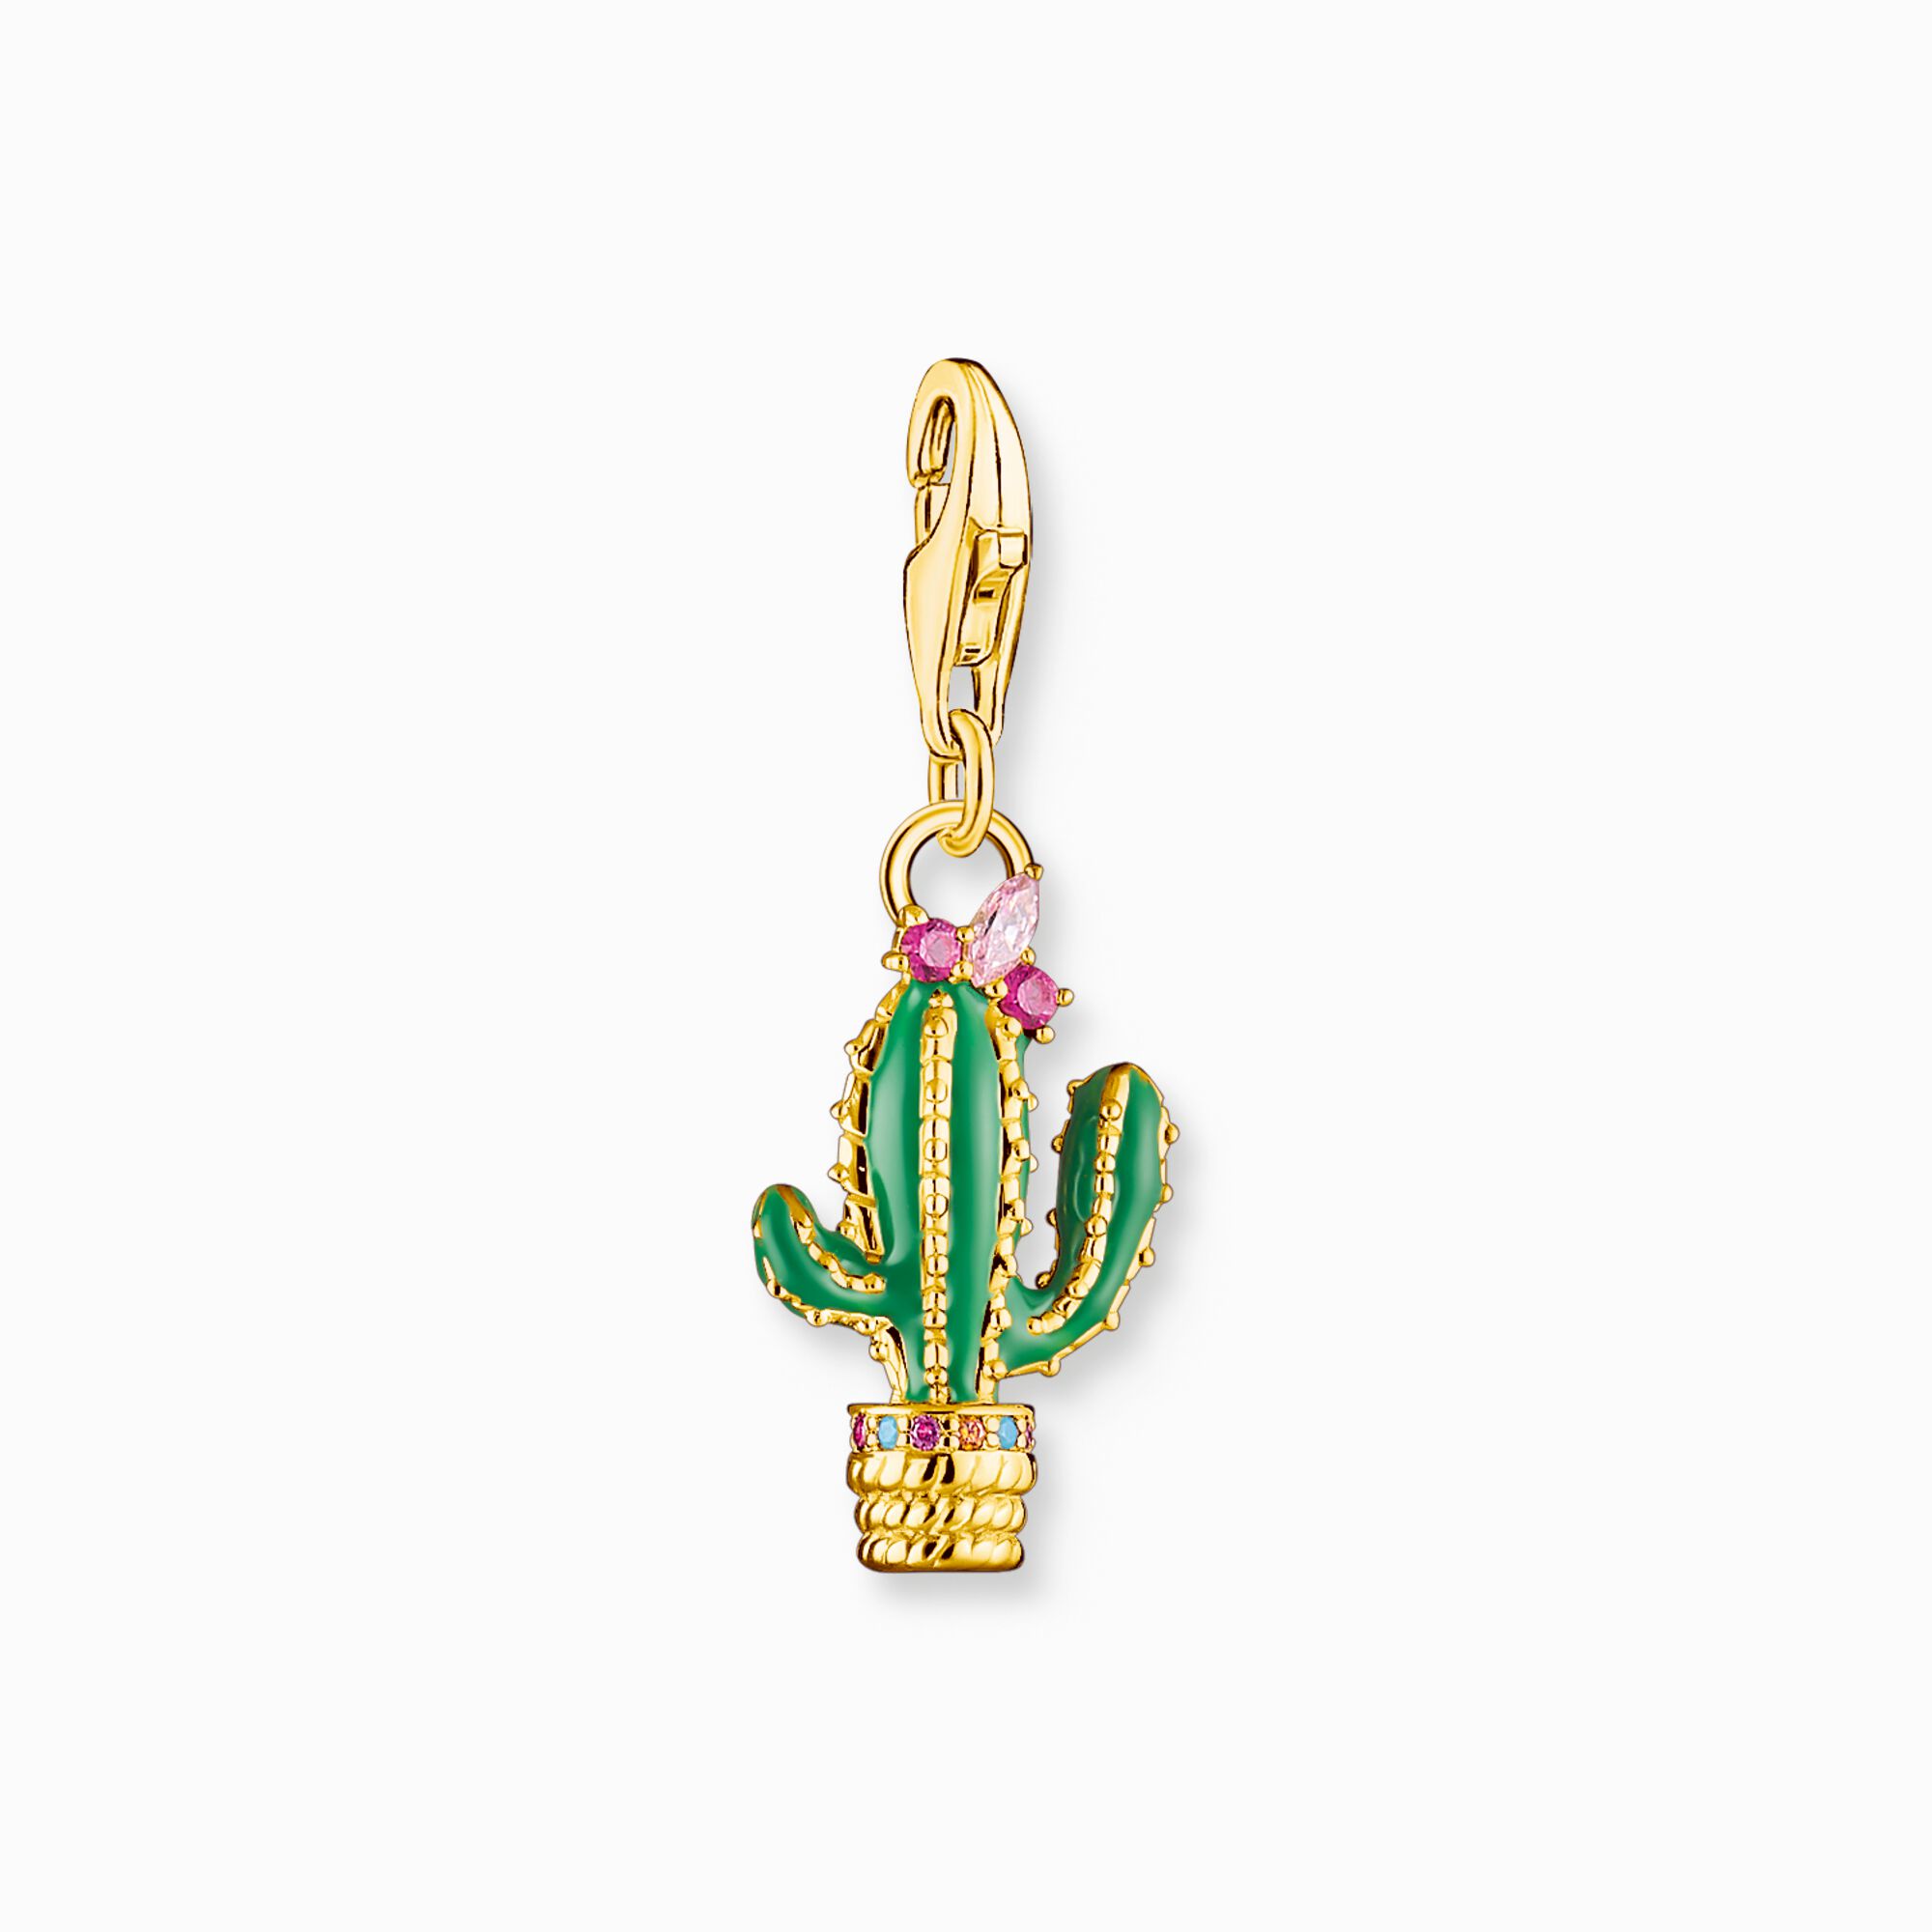 Charm, vergoldet: Kaktus mit grüner THOMAS | SABO Kaltemaille